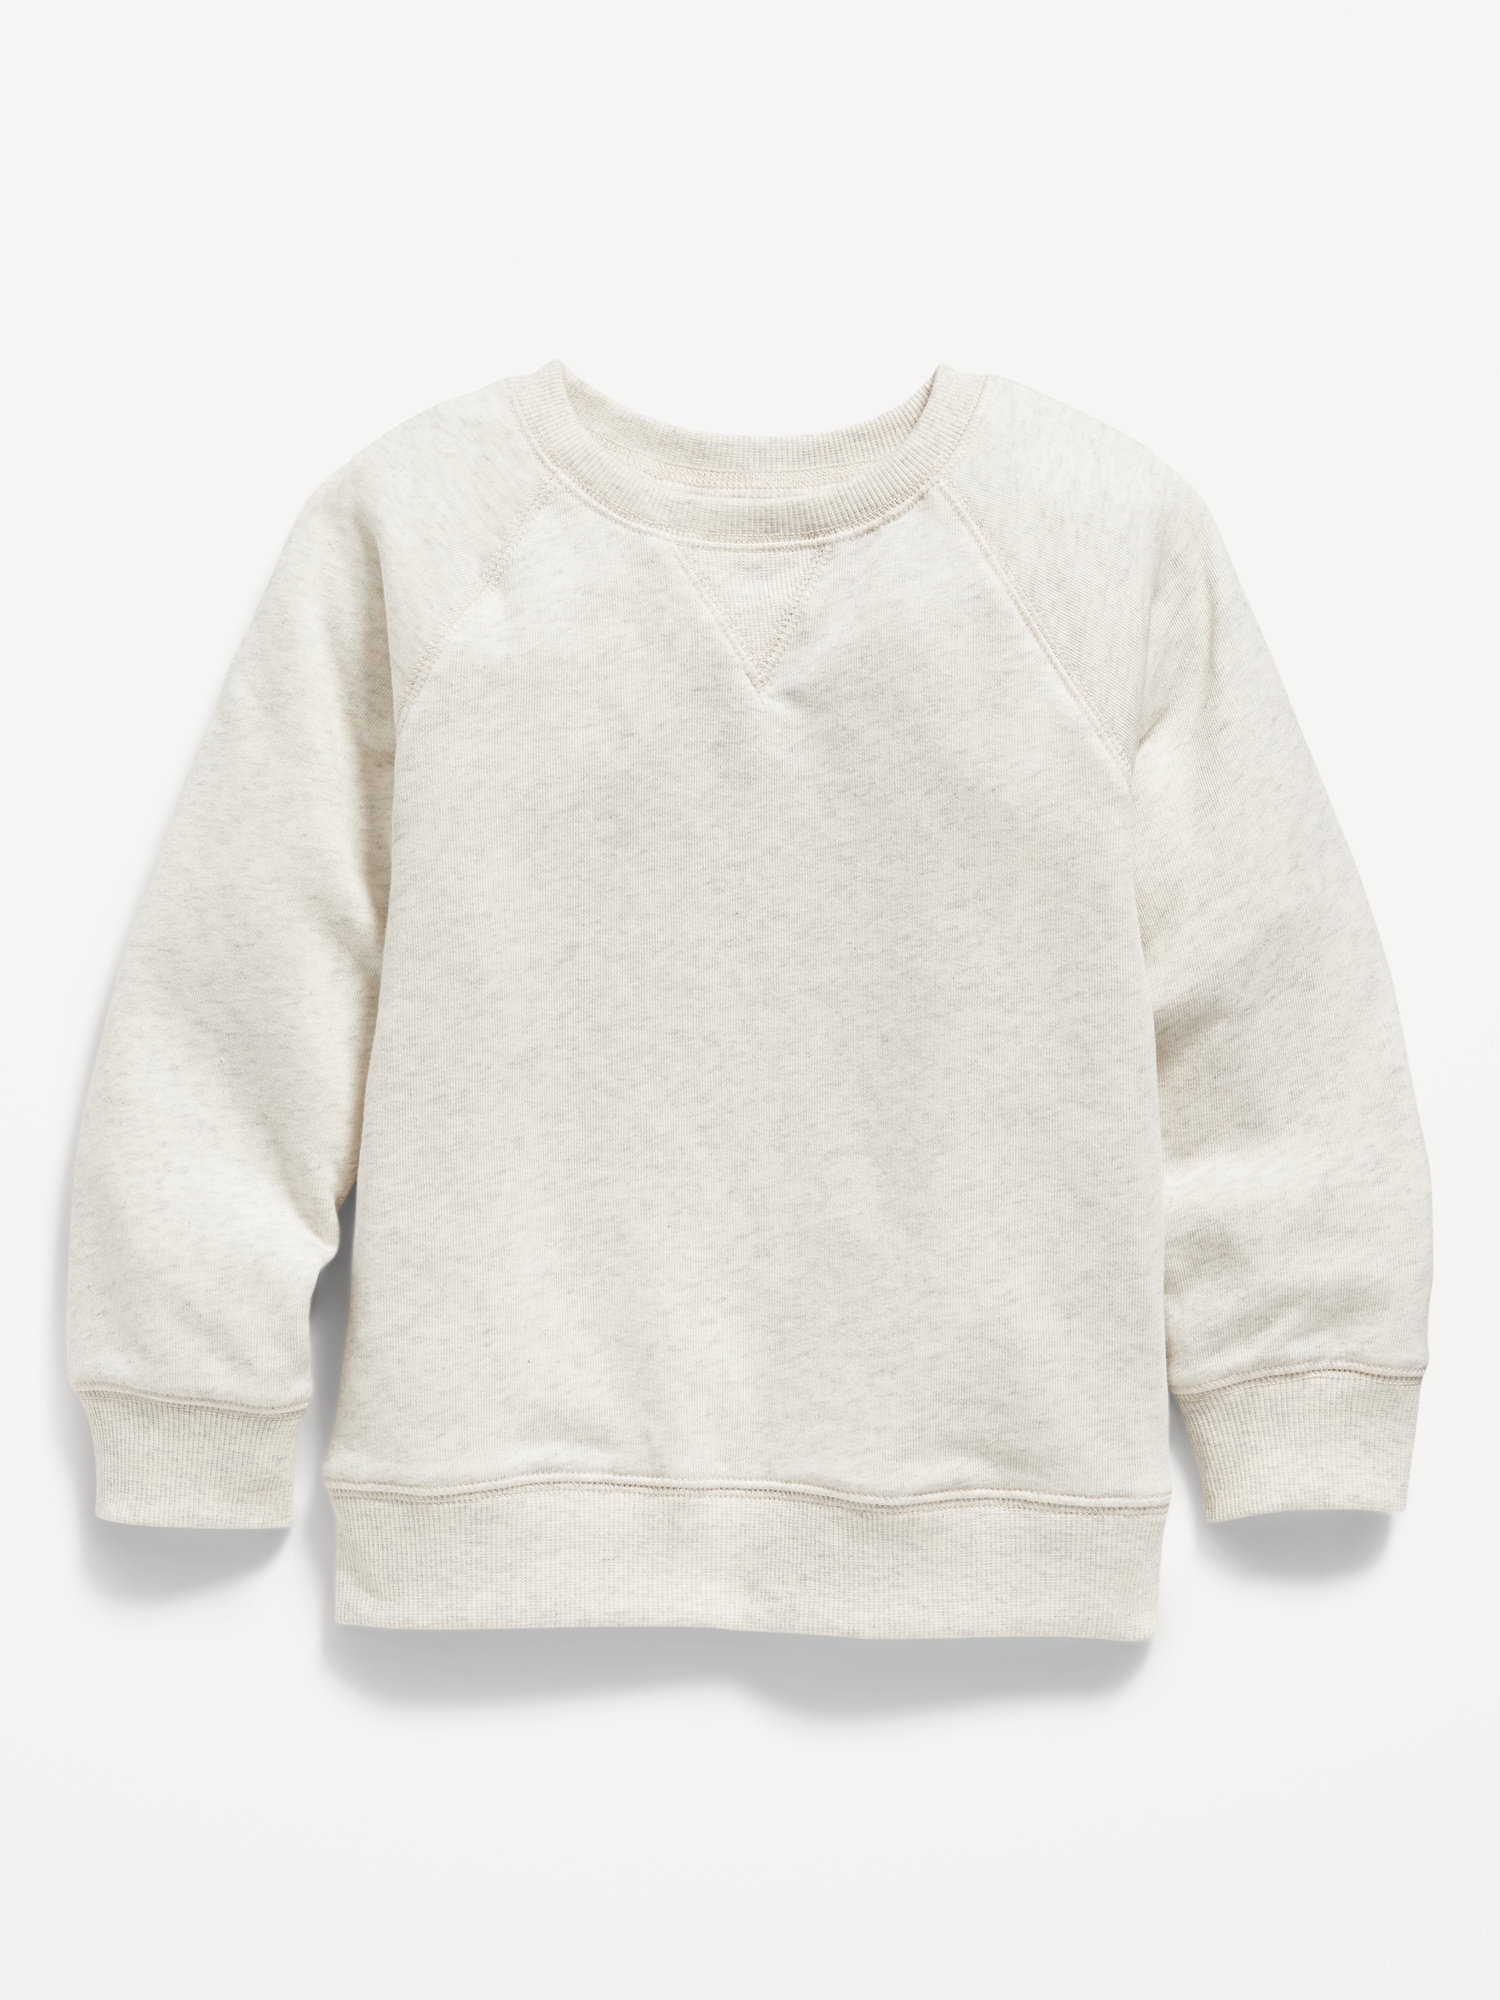 Crew-Neck Sweatshirt for Toddler Boys